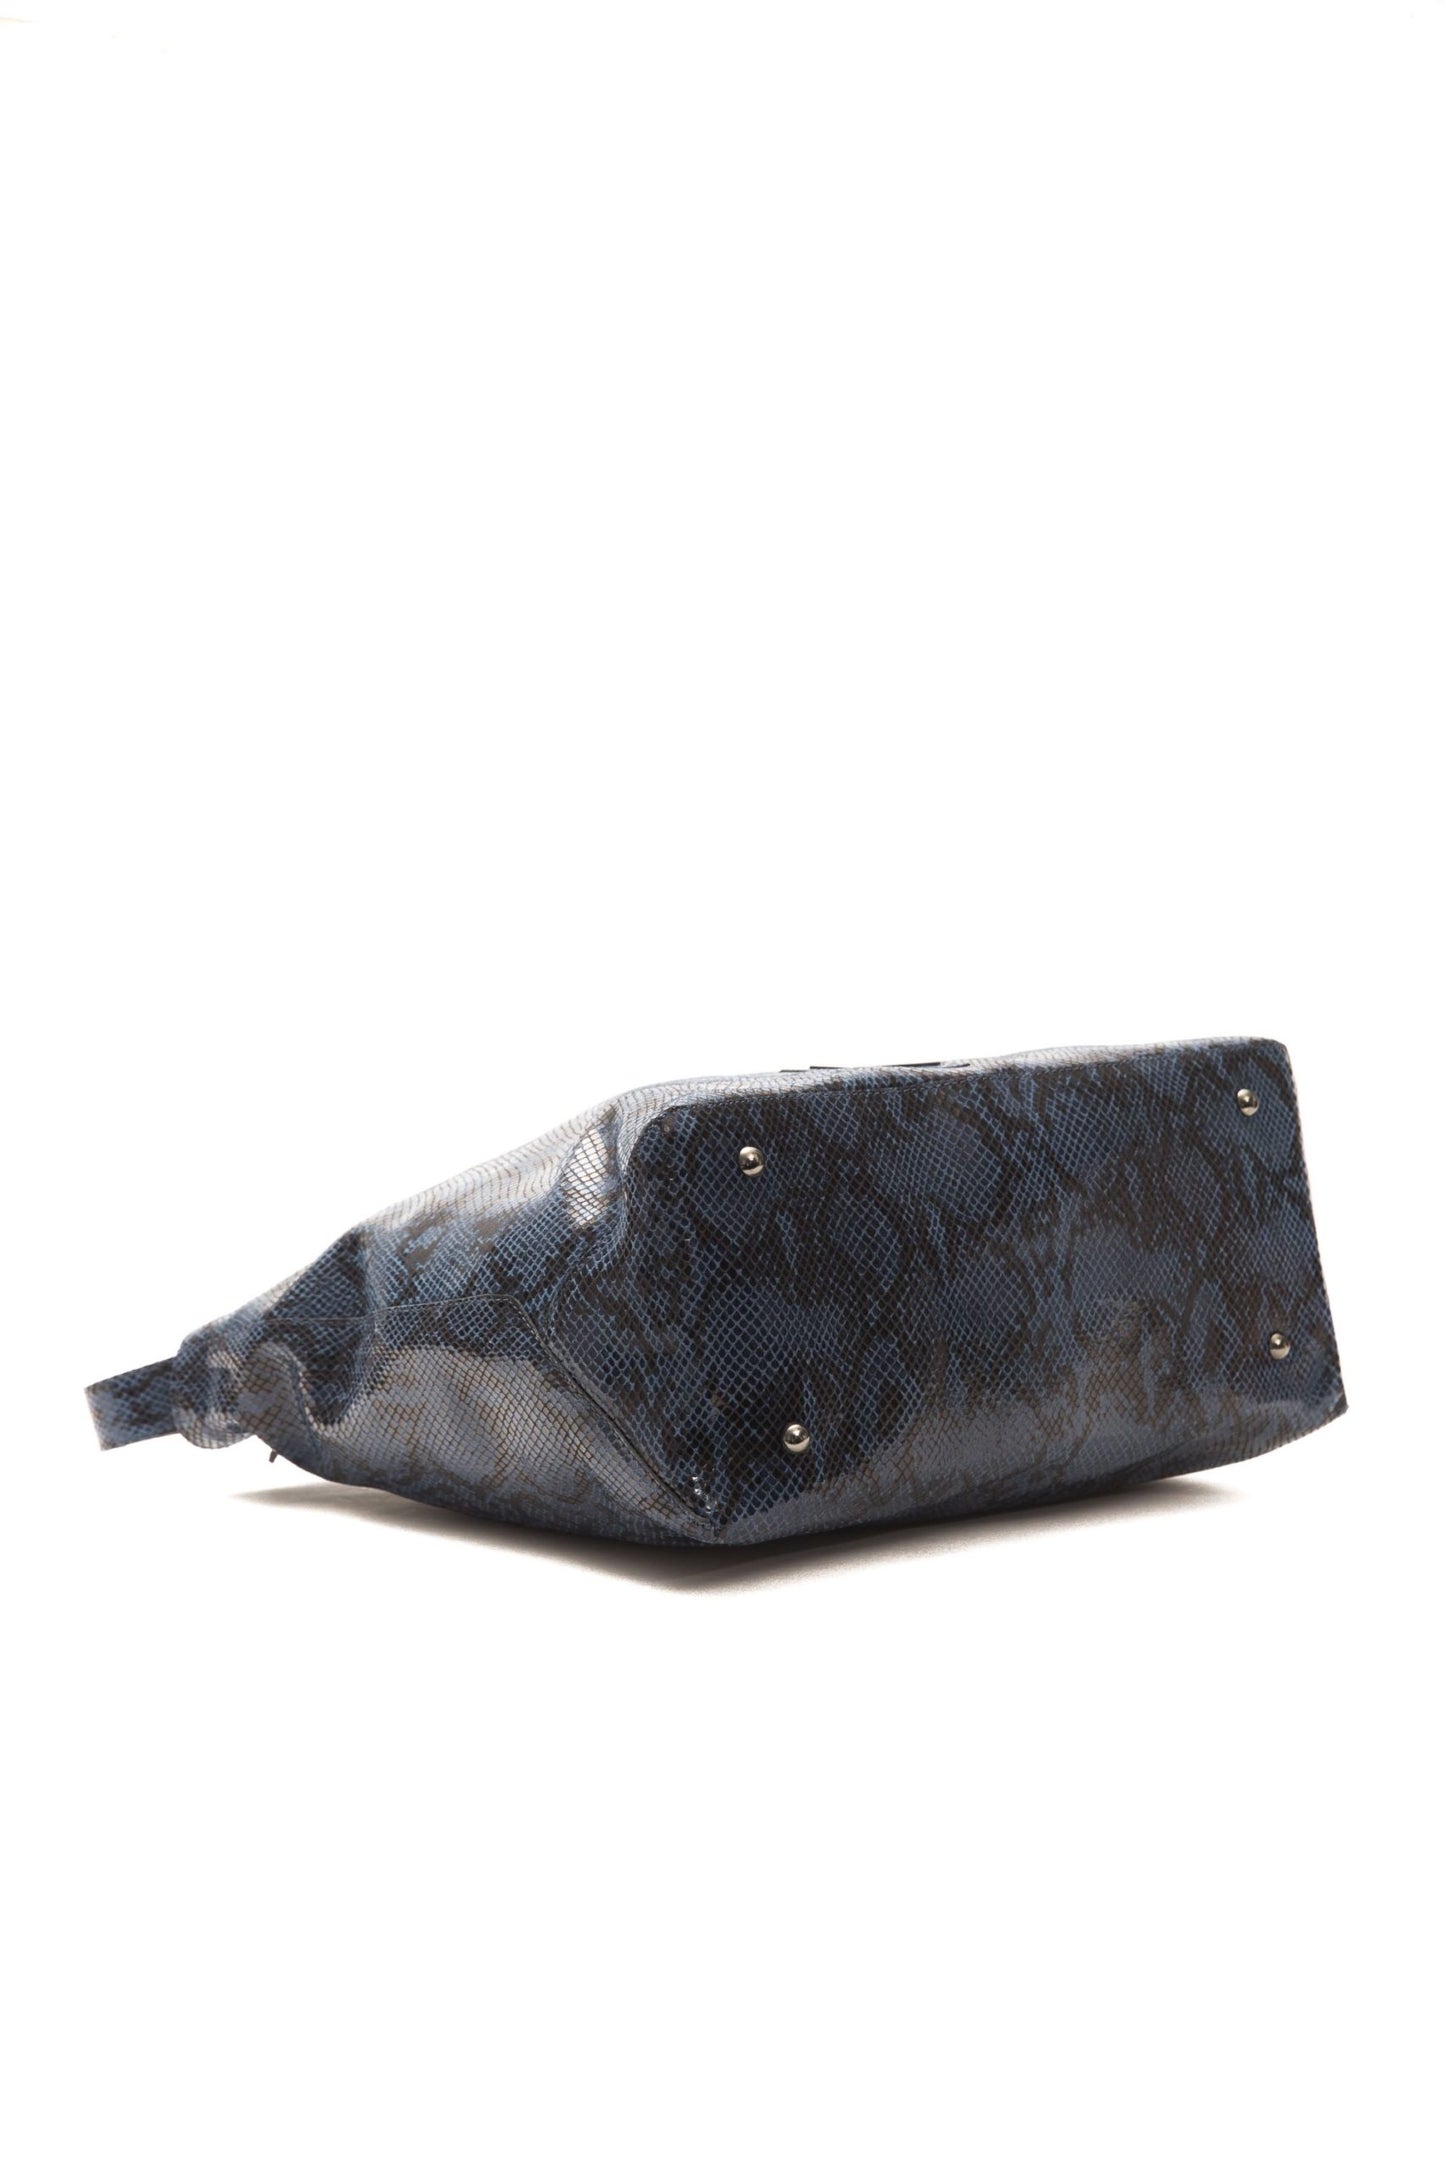 Pompei Donatella Blue Leather Shoulder Bag - DEA STILOSA MILANO